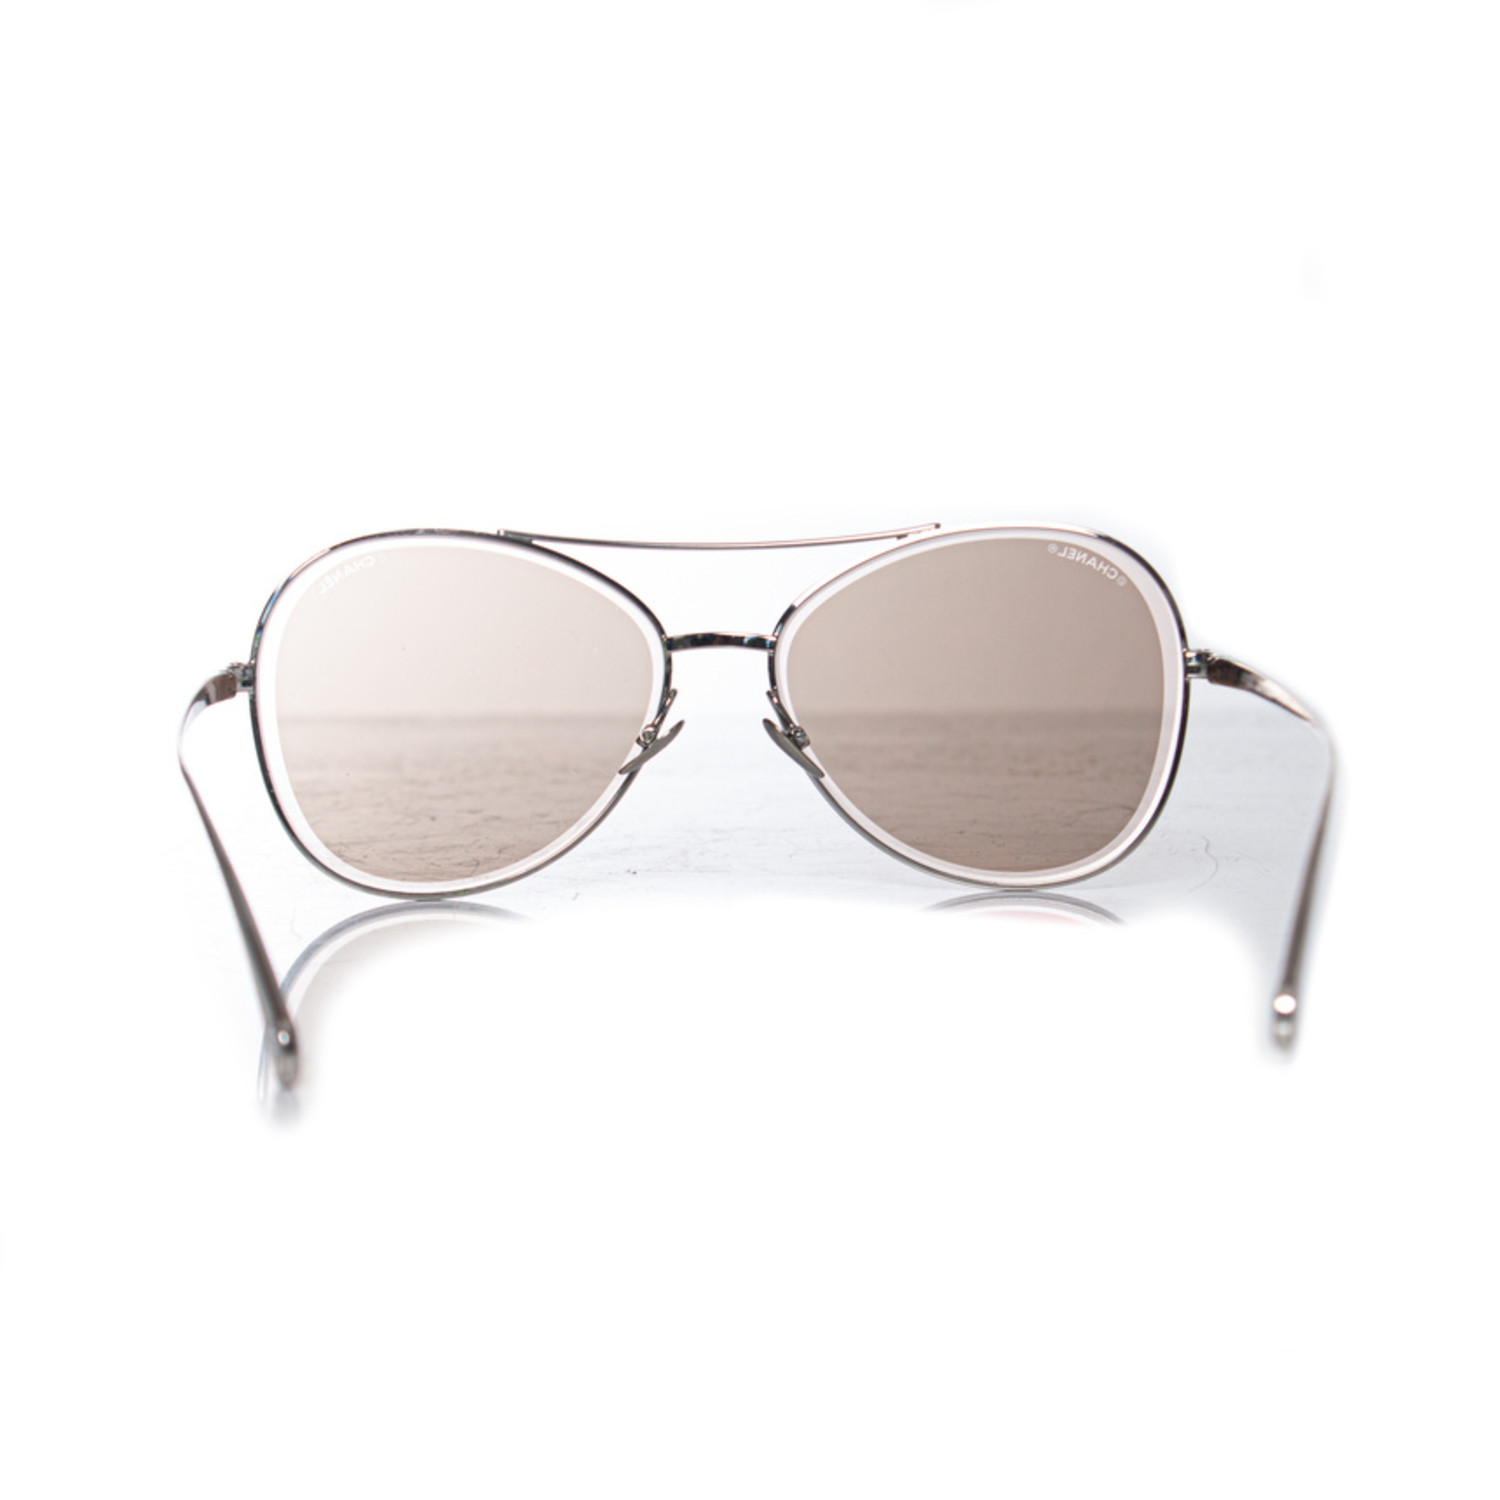 Chanel, Pilot sunglasses with metal silver frame - Unique Designer Pieces